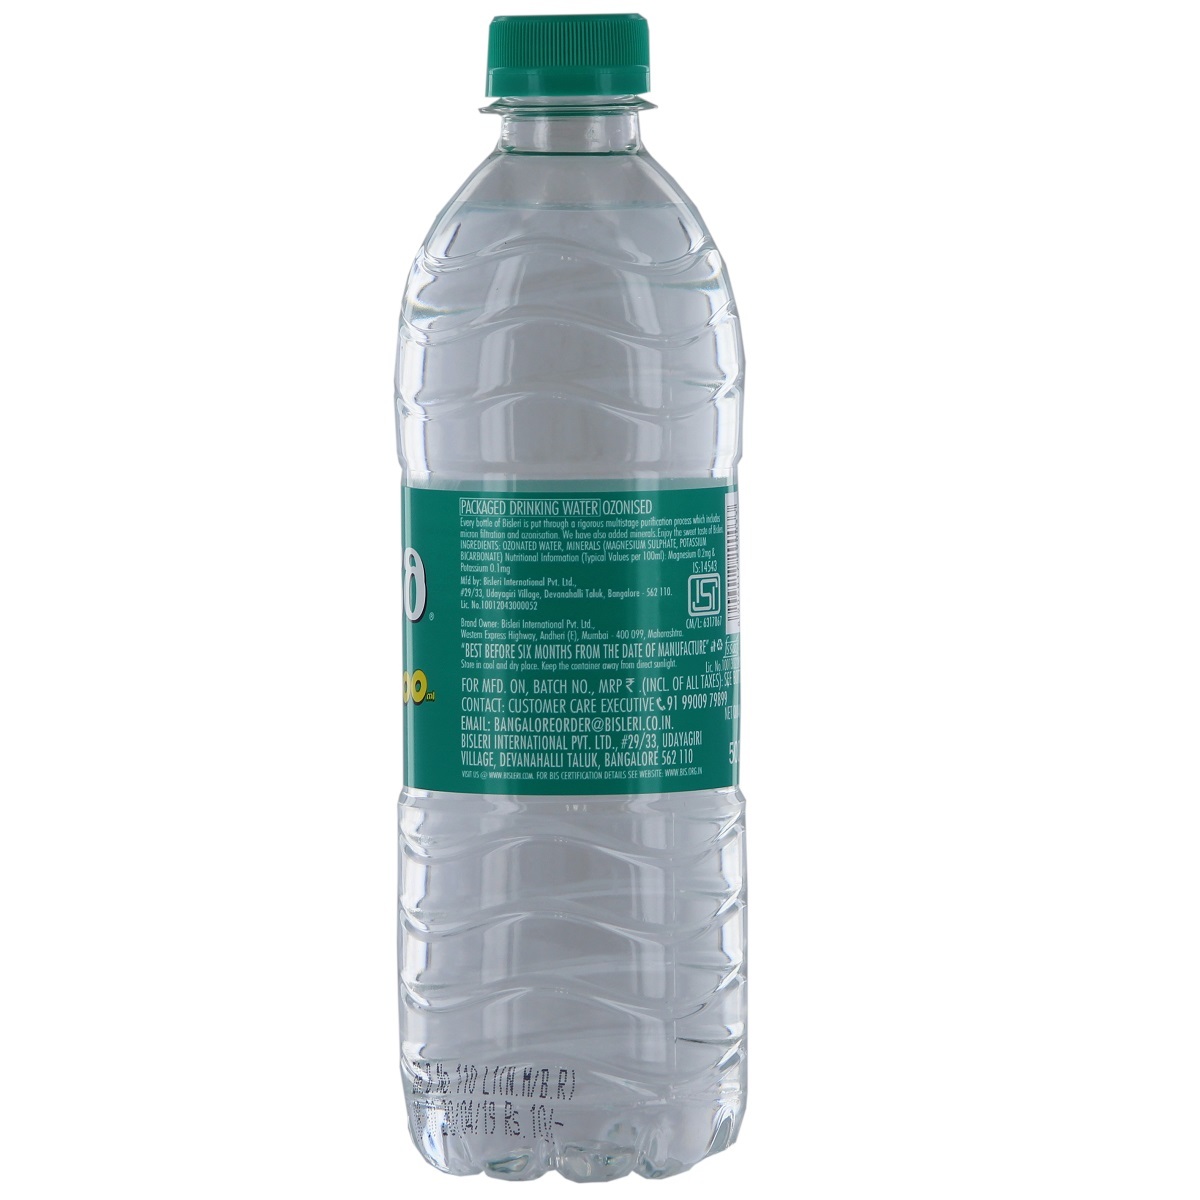 Bisleri Mineral Water 500ml